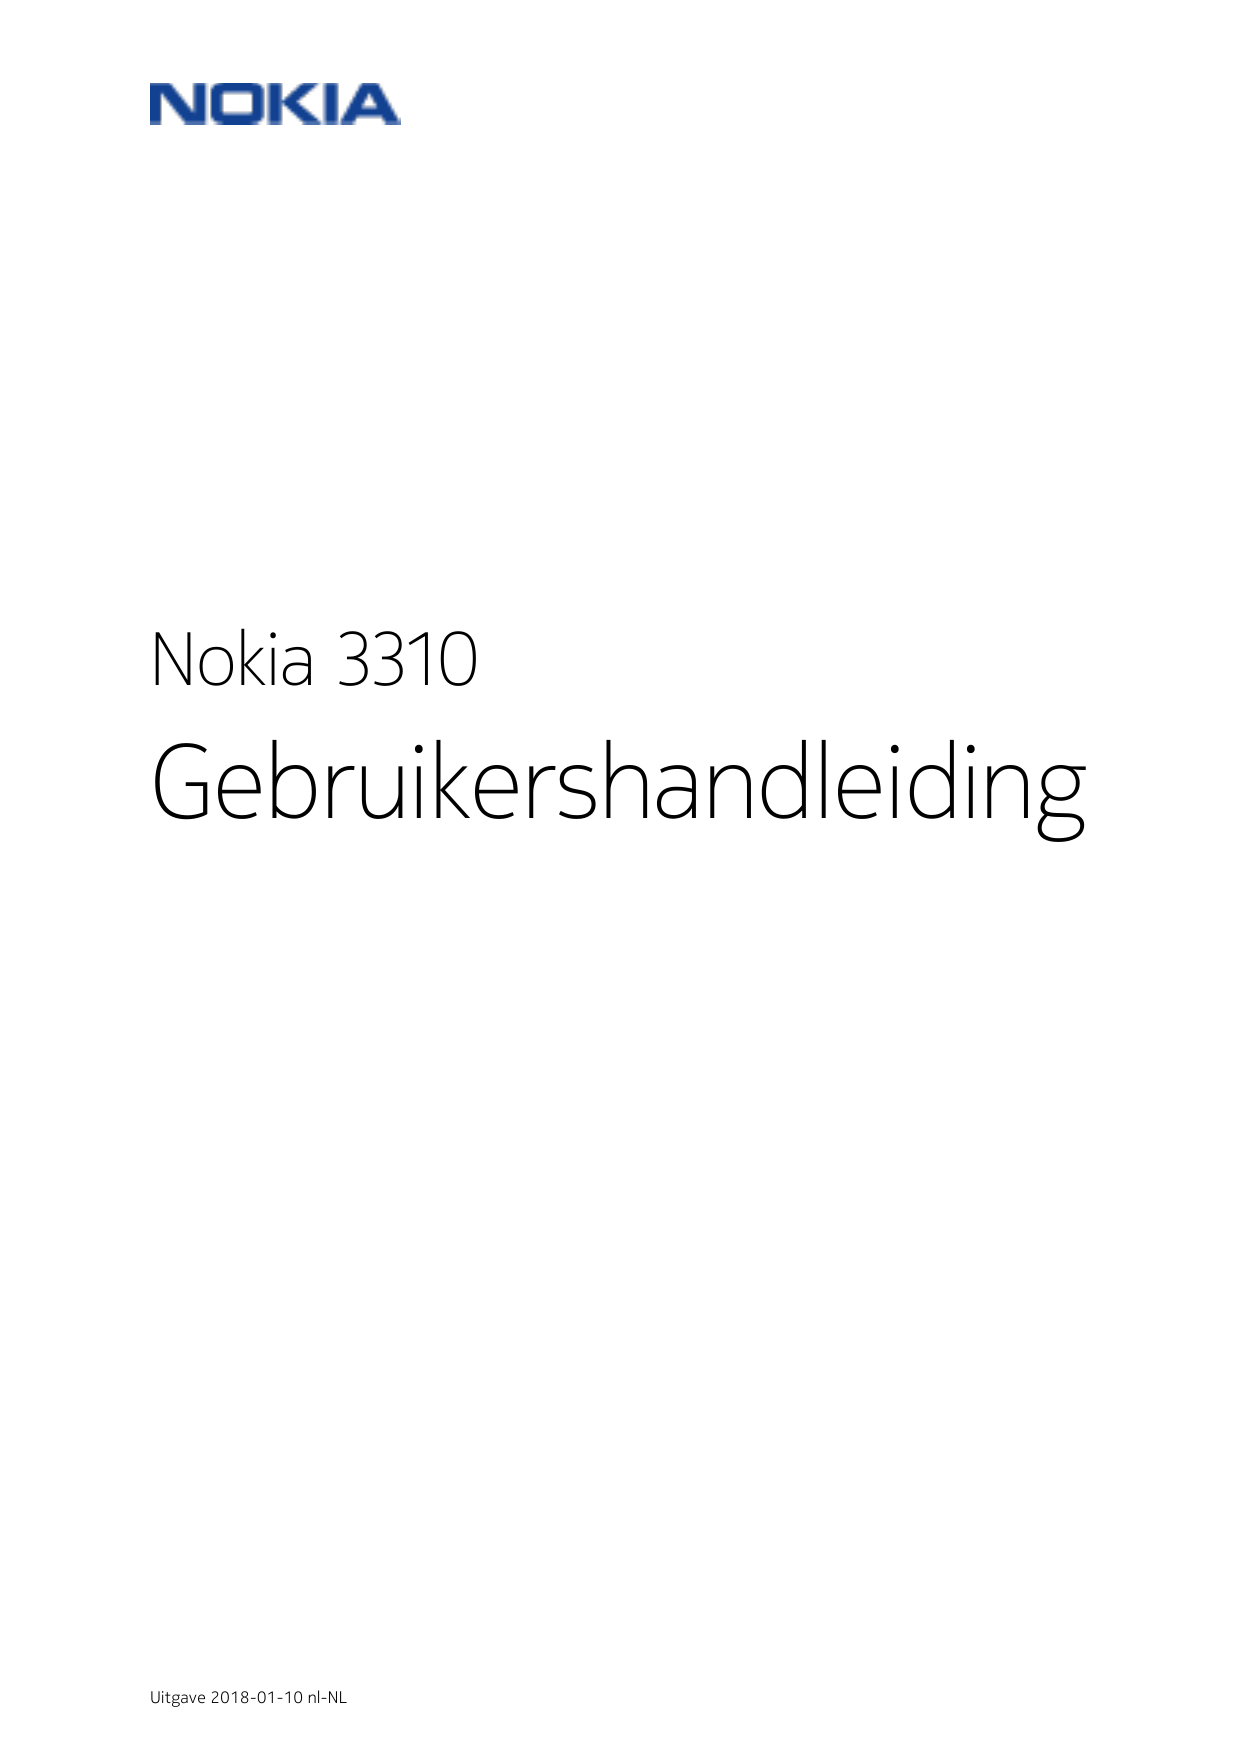 Nokia 3310GebruikershandleidingUitgave 2018-01-10 nl-NL